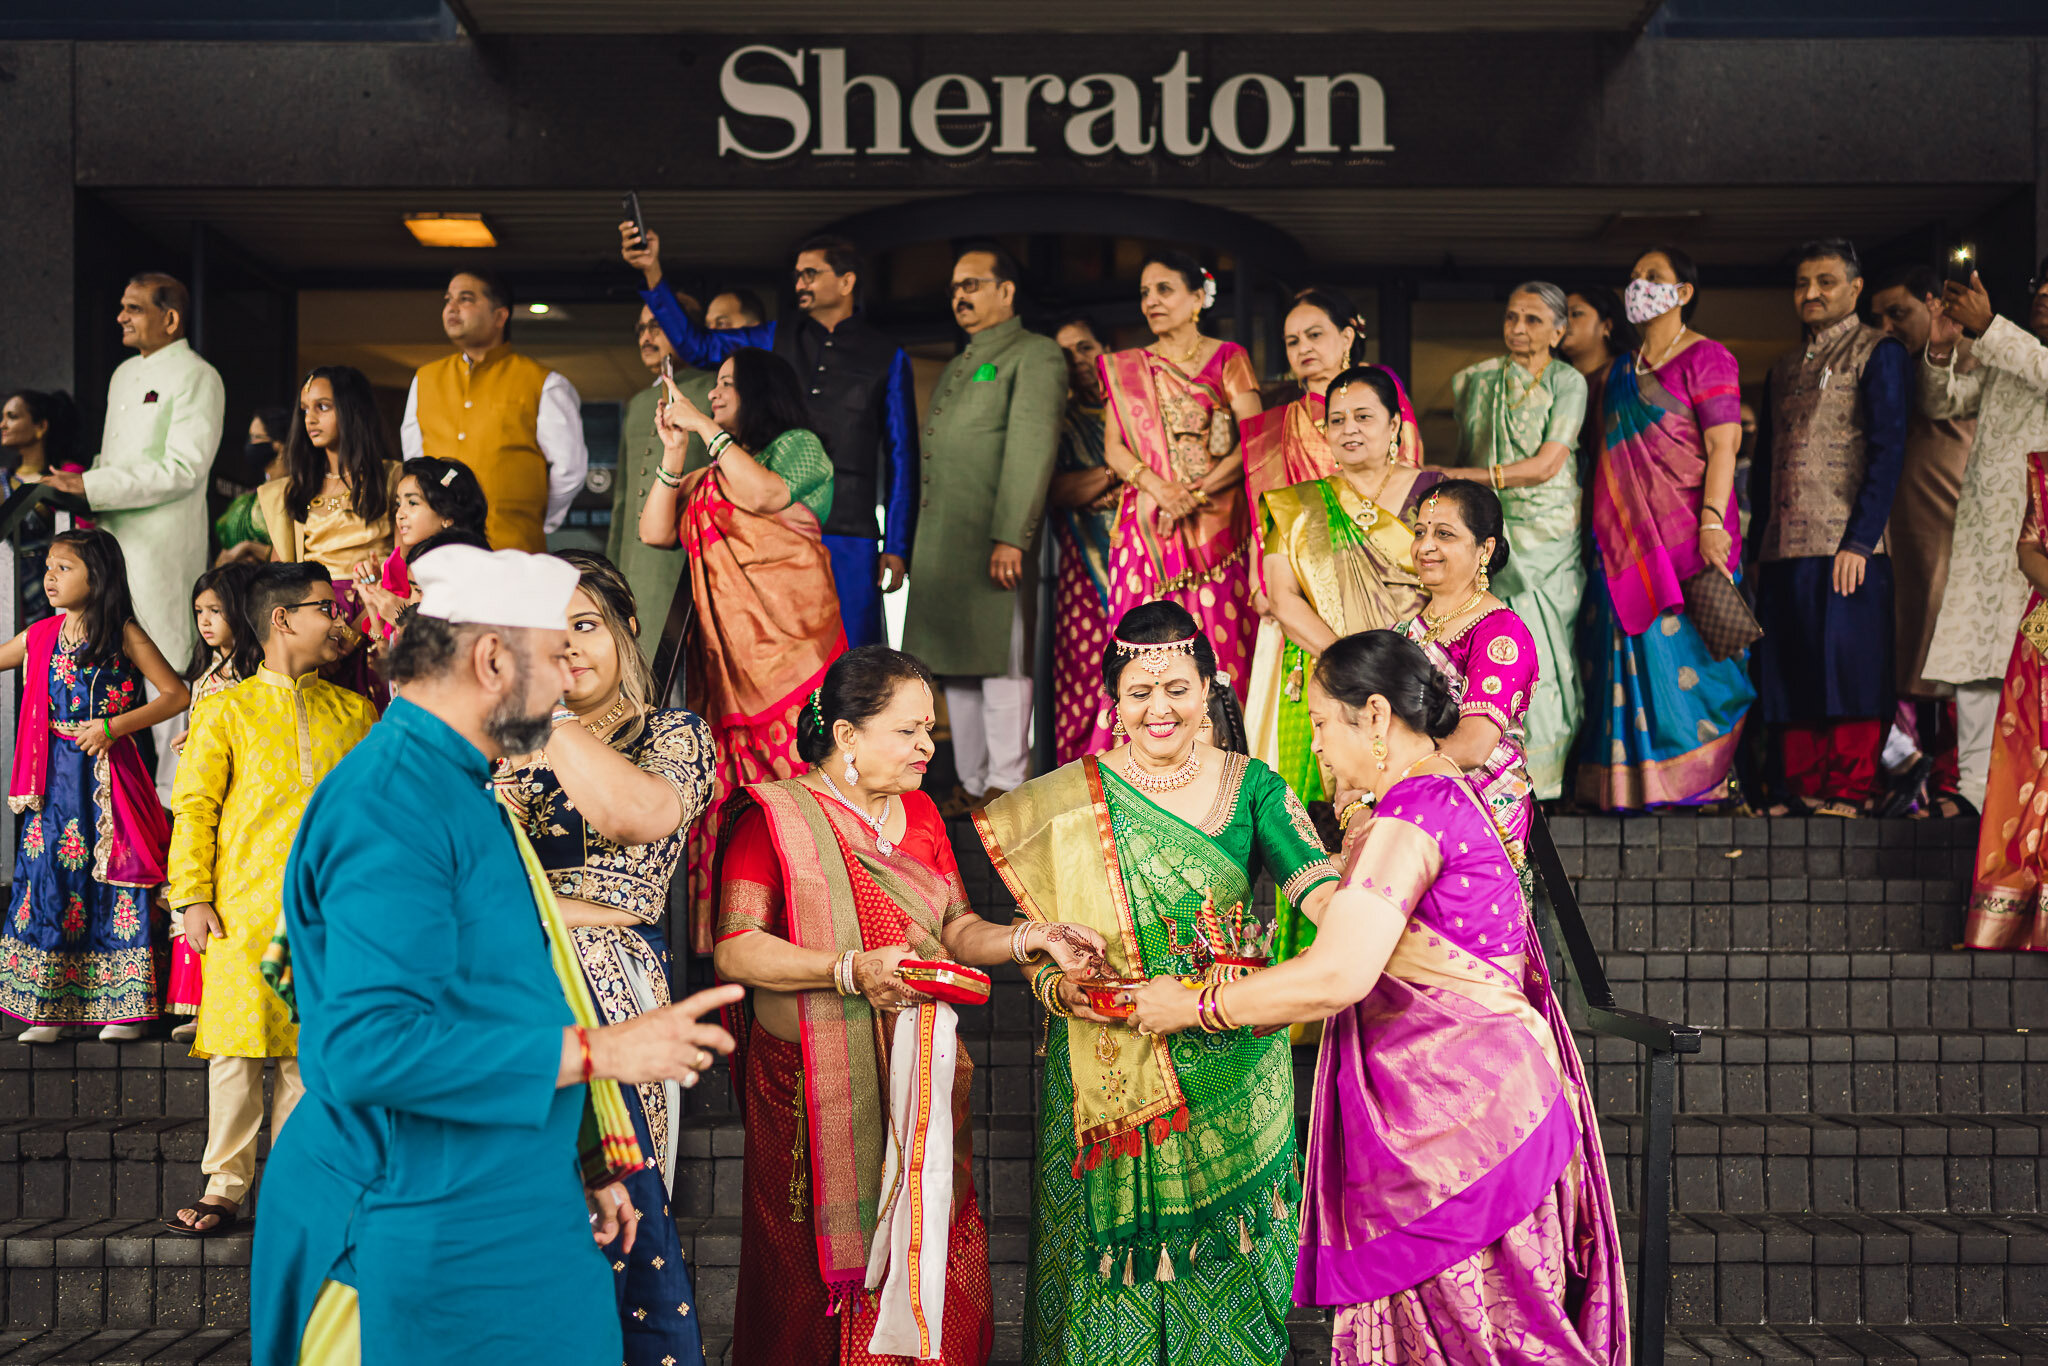 Sheraton Mahwah Hotel Indian wedding braat procession